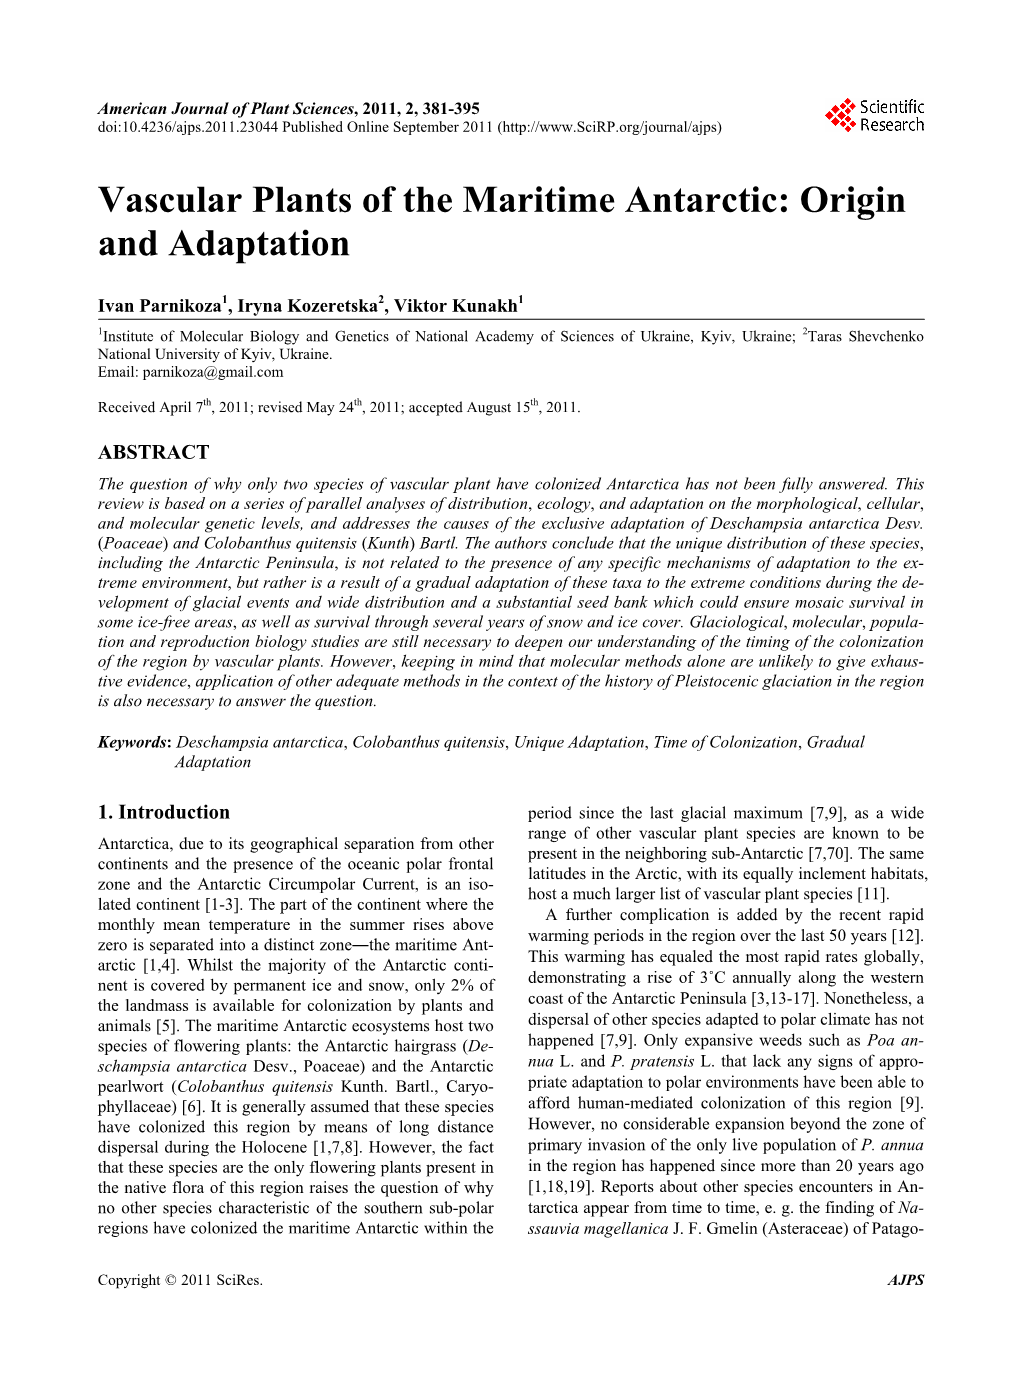 Vascular Plants of the Maritime Antarctic: Origin and Adaptation